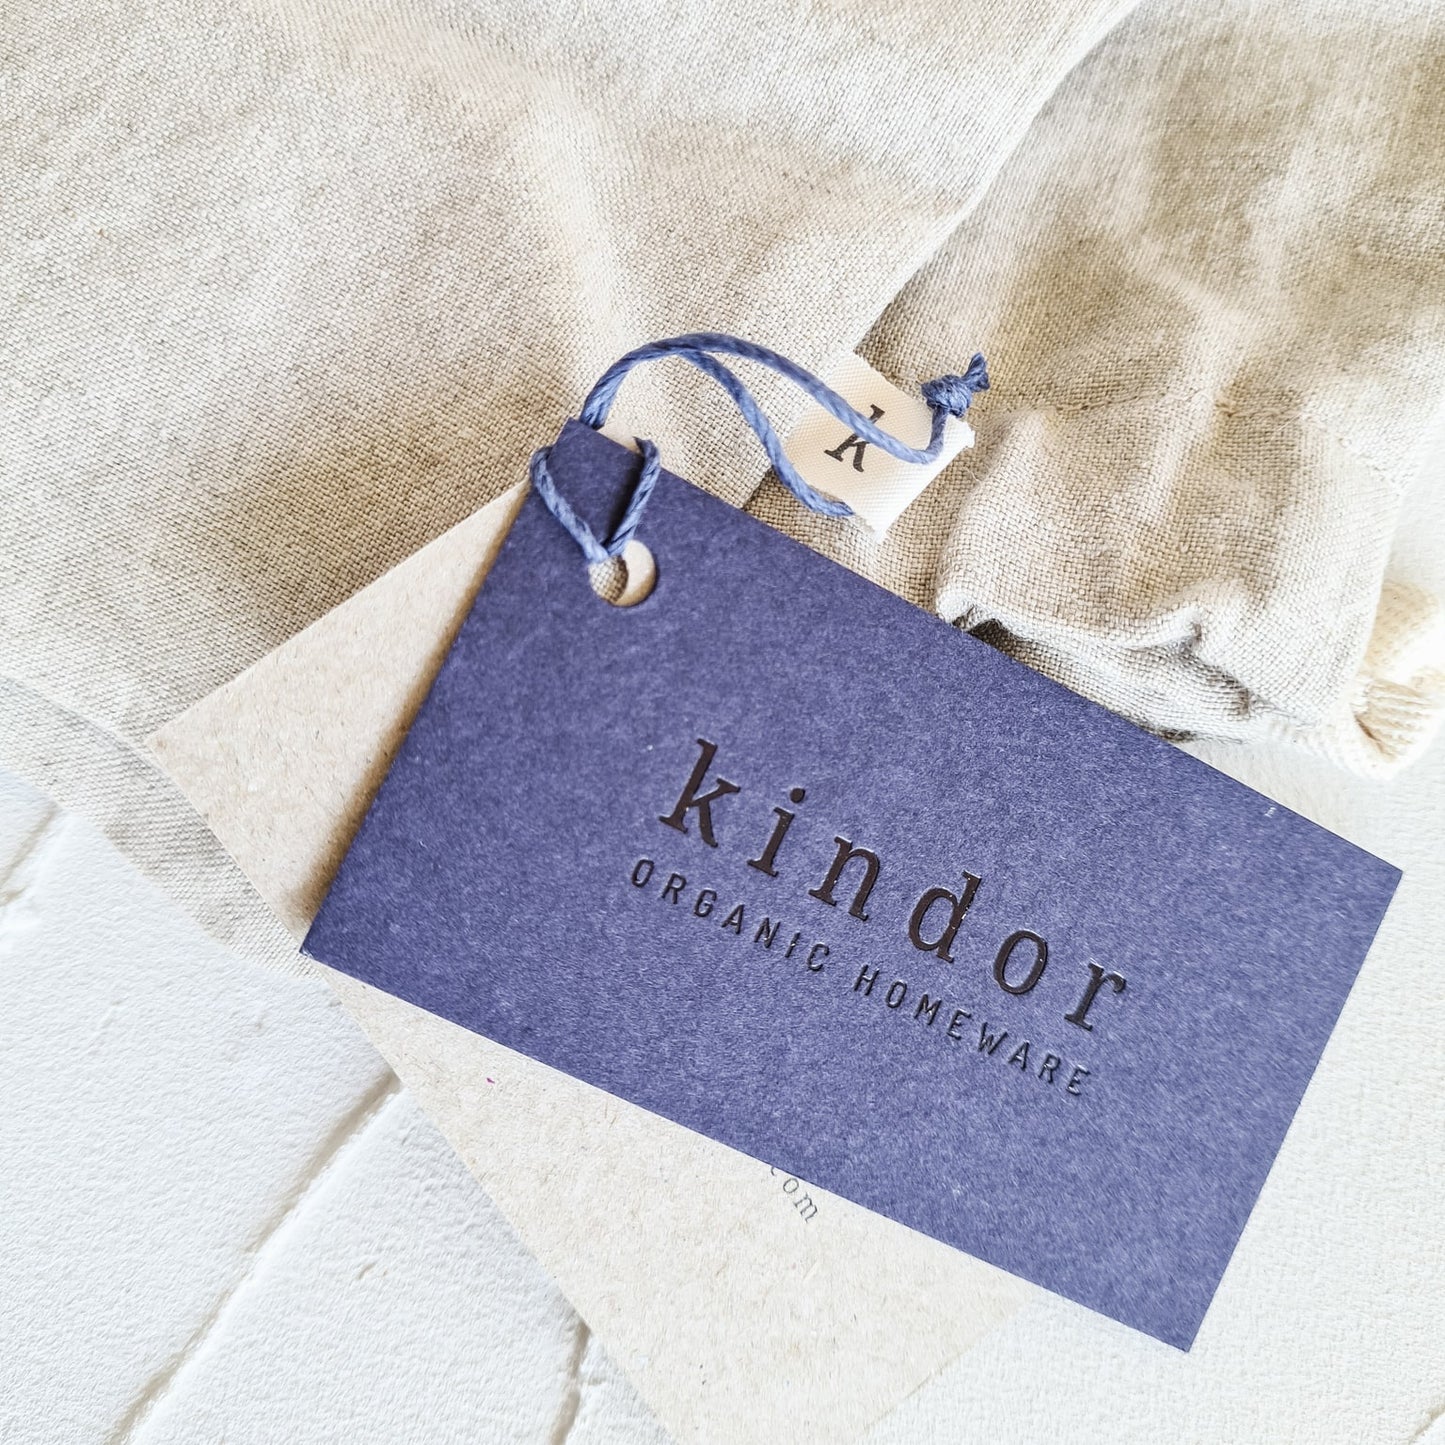 kindor produce bags 3pk